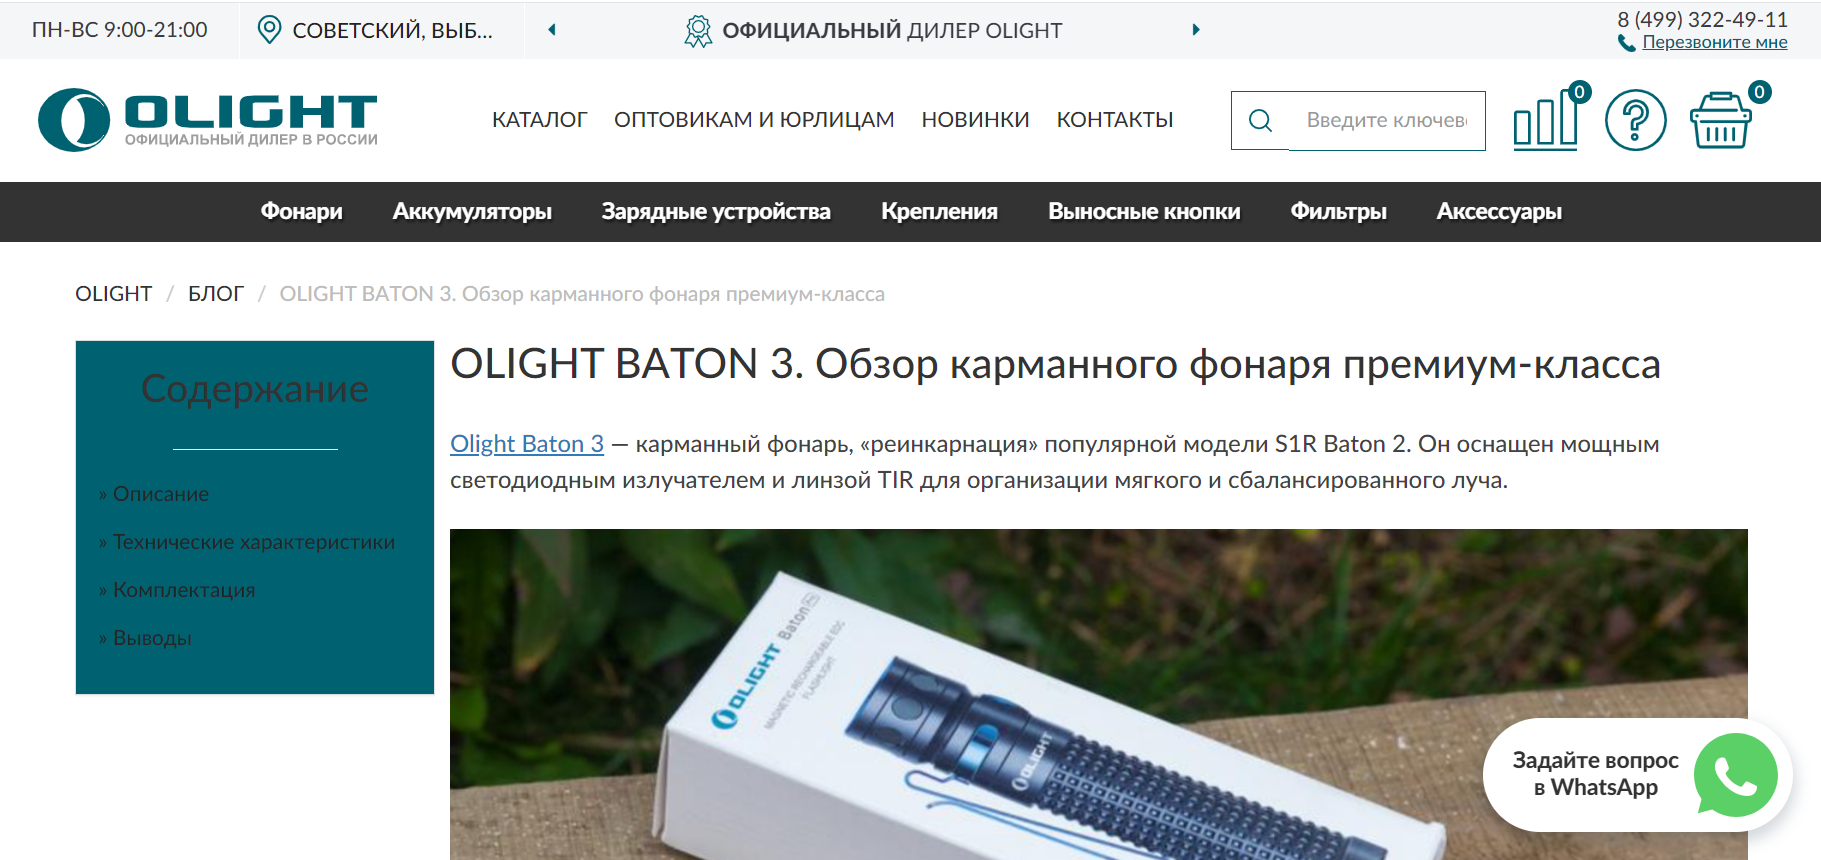 Olight Baton 3. Обзор карманного фонаря премиум-класса